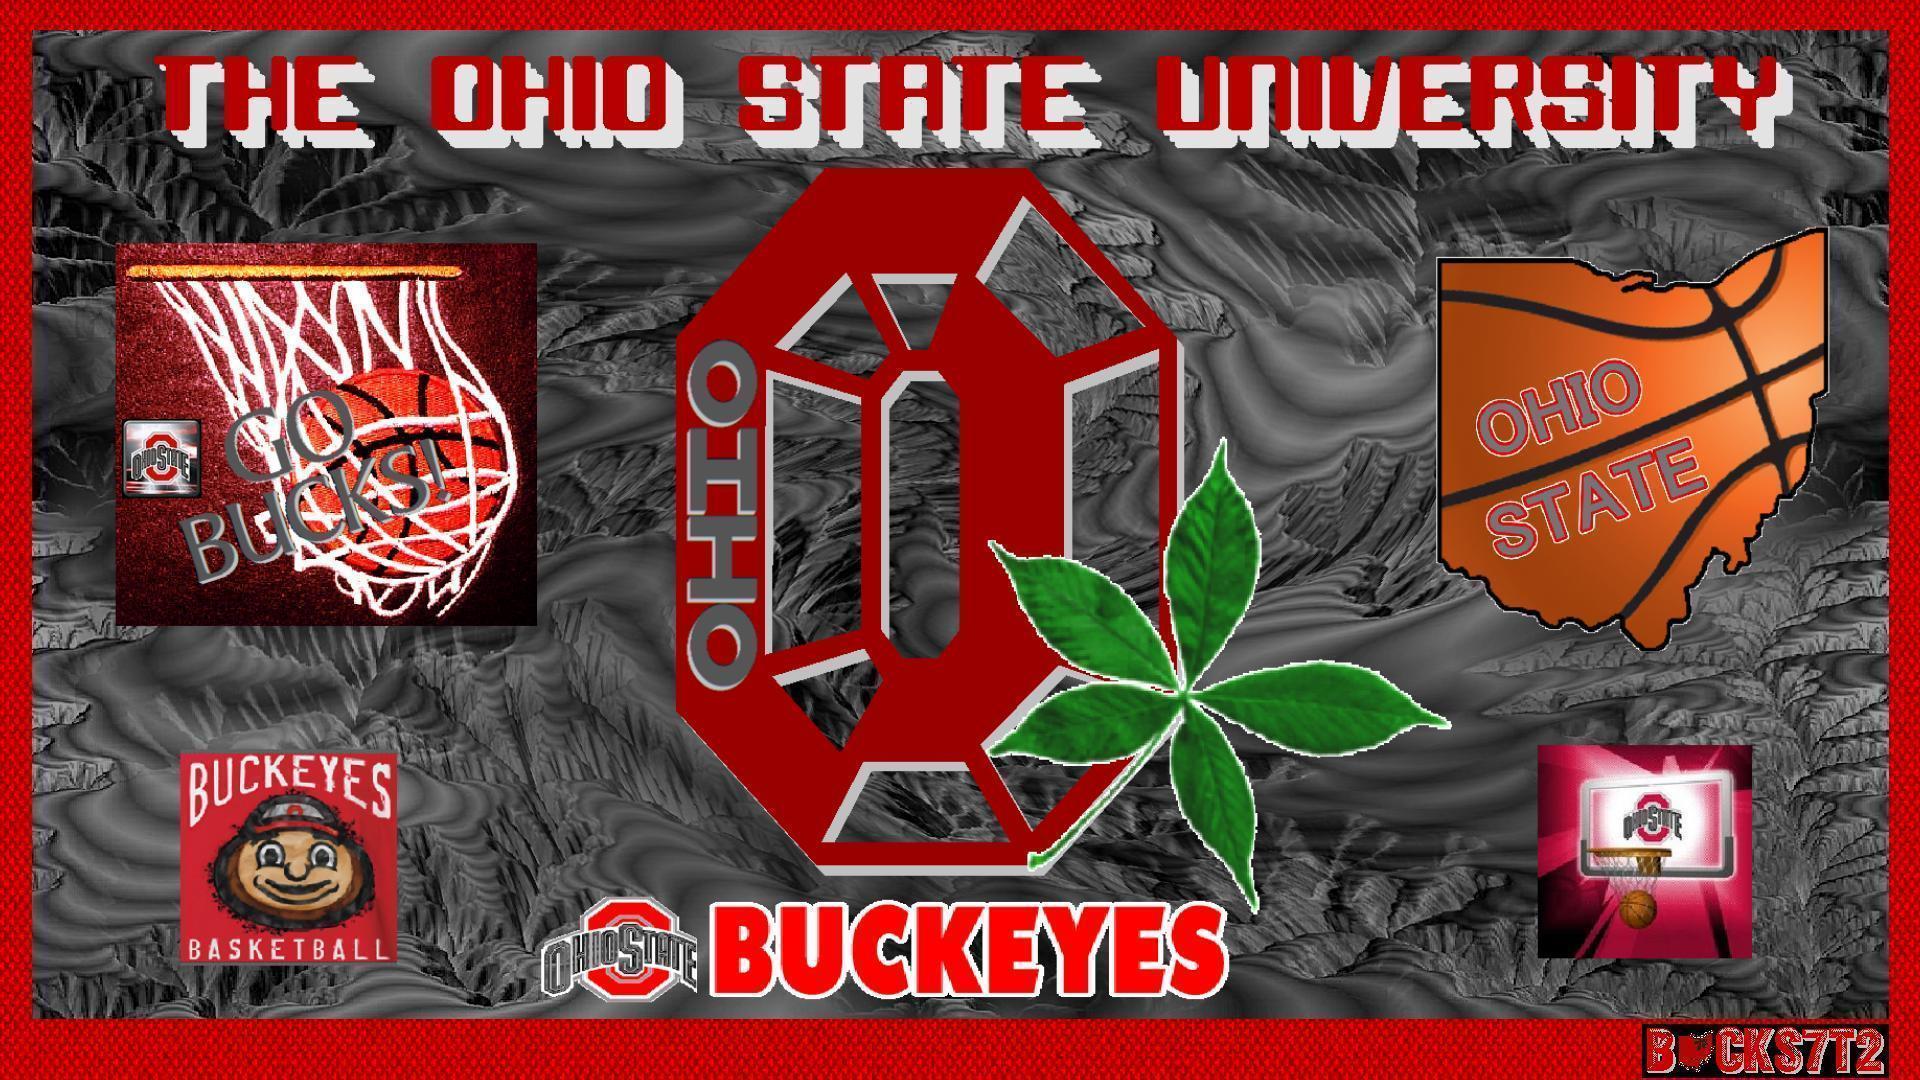 OSU BUCKEYES GO BUCKS! State University Basketball